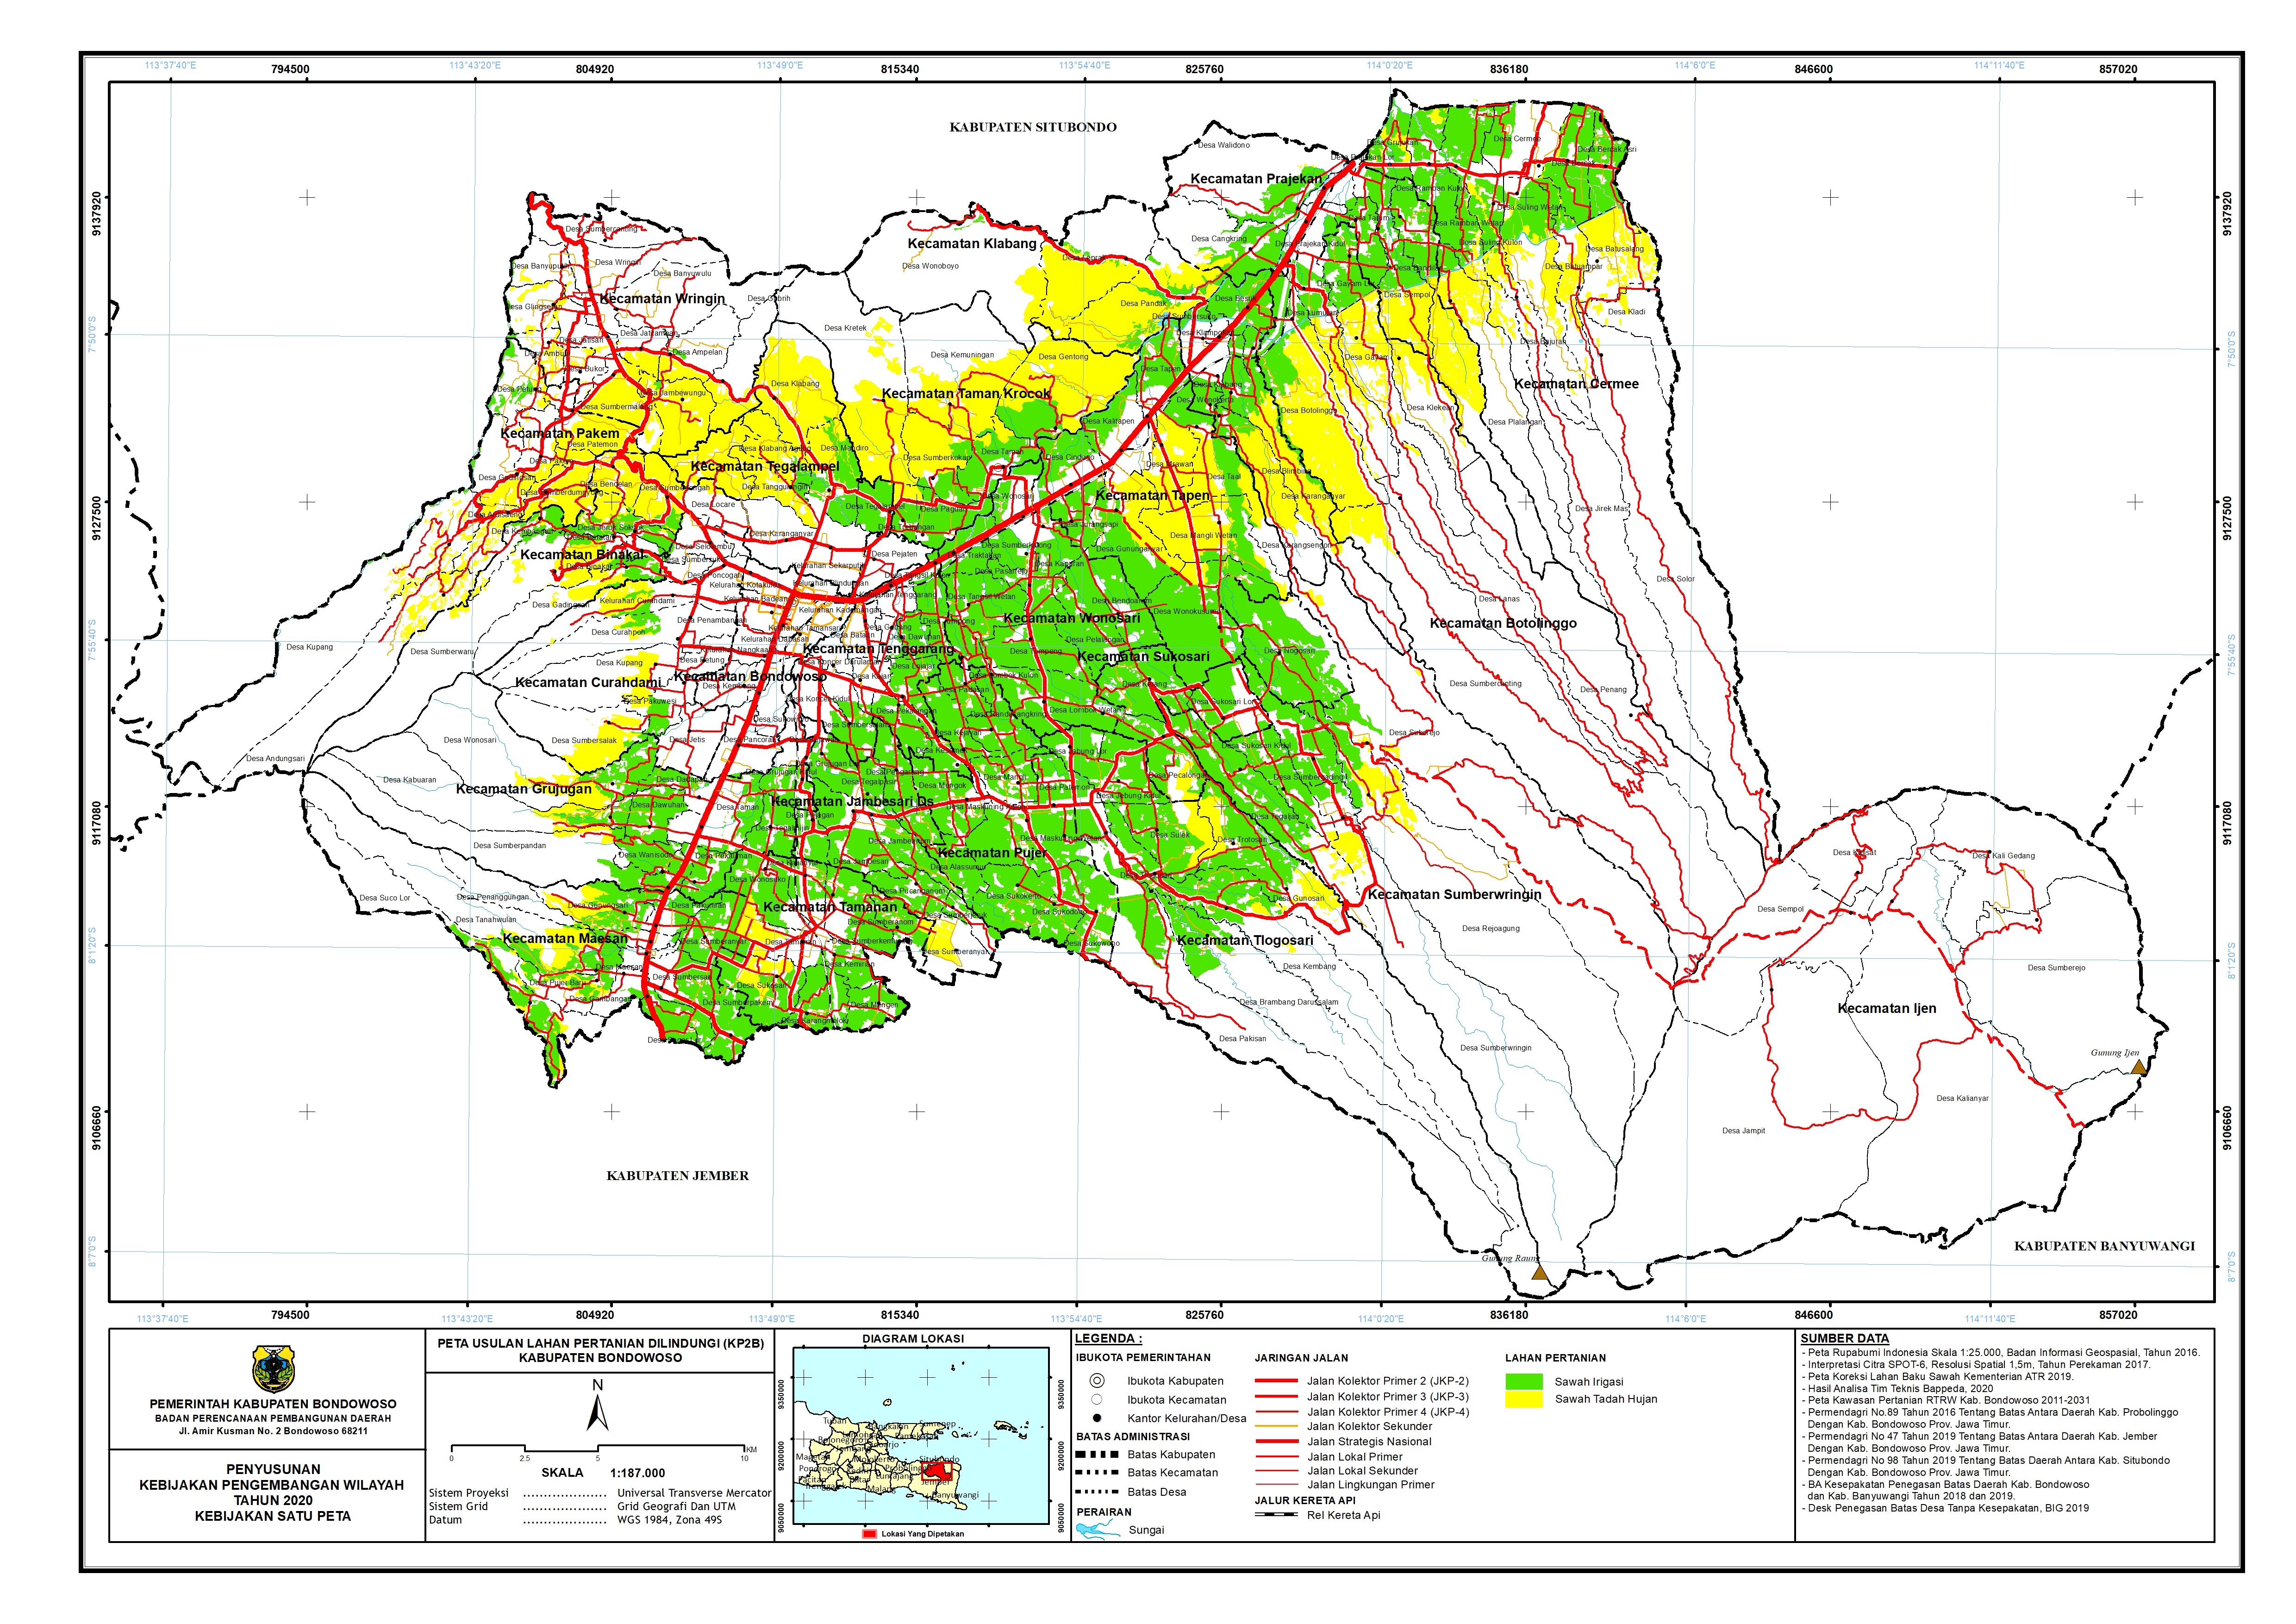 Peta Usulan Lahan Pertanian  Dilindungi Kabupaten Bondowoso.png